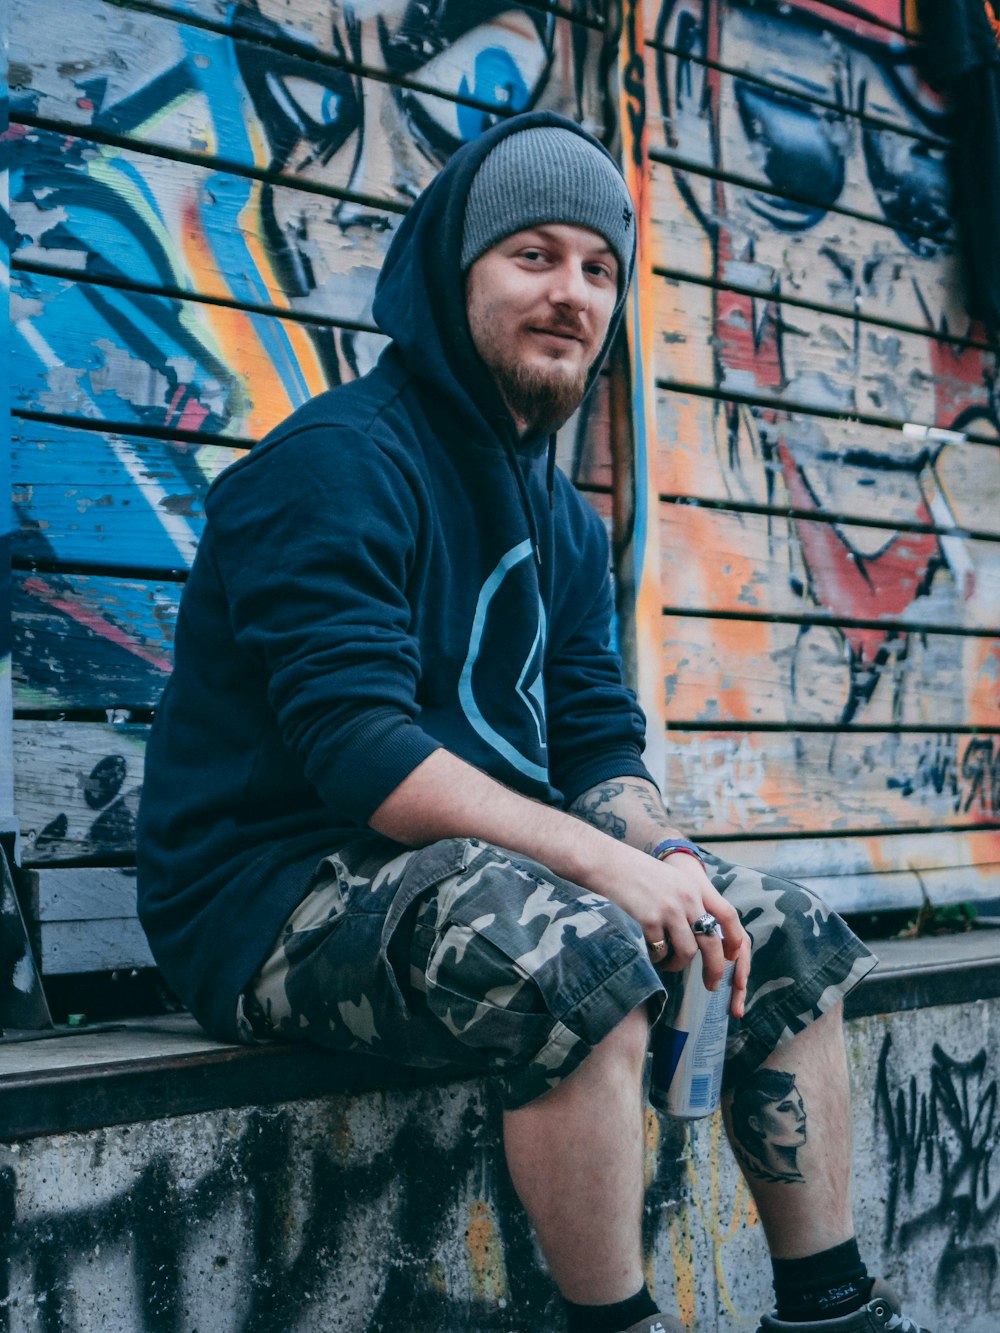 man sitting on concrete seat with graffiti